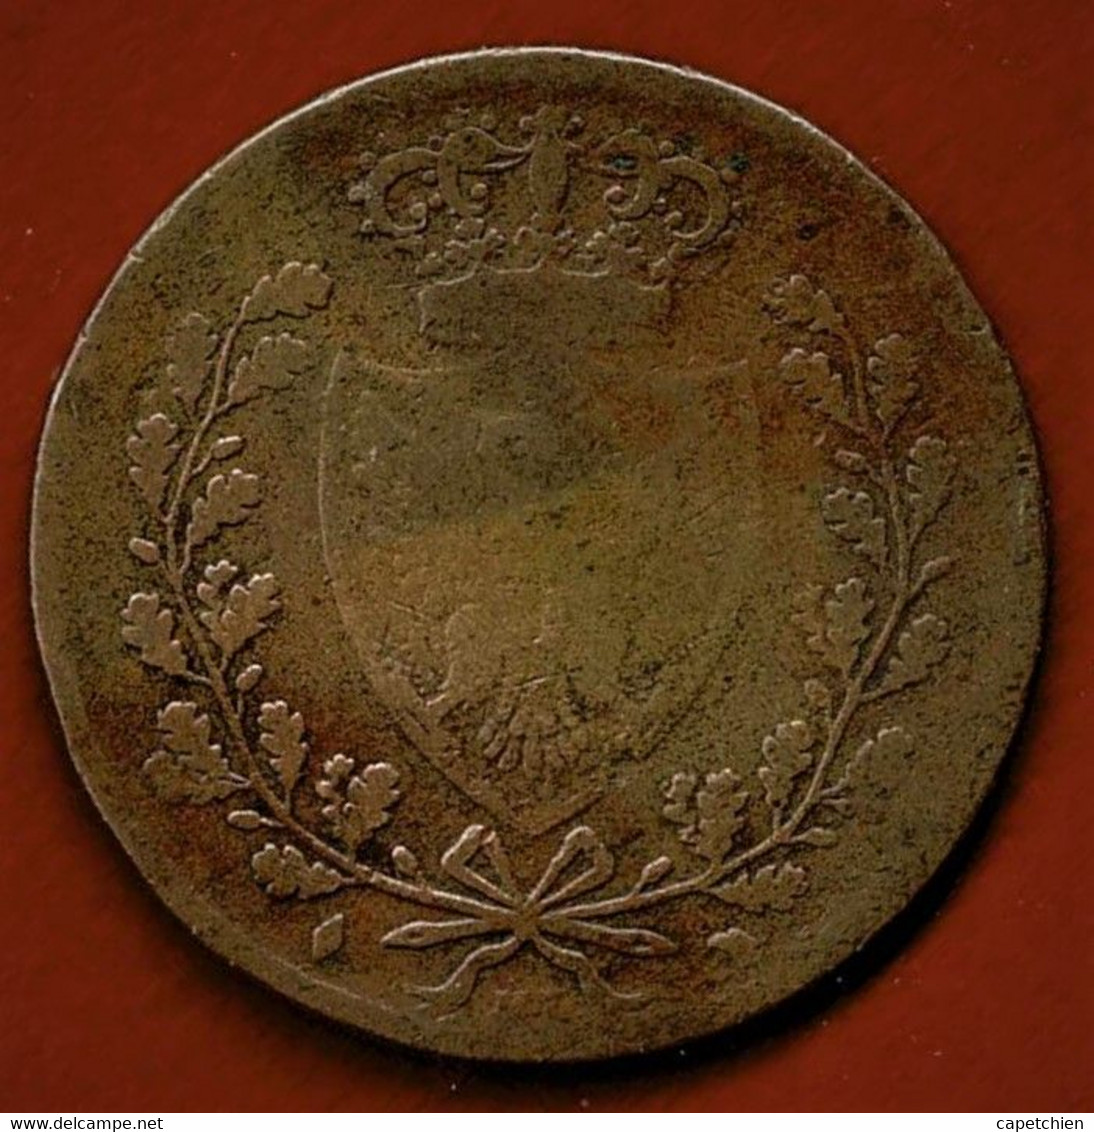 PIECE ITALIENNE Avec UNE CONTREMARQUE MANUELLE * F V 1862 * - Monedas/ De Necesidad